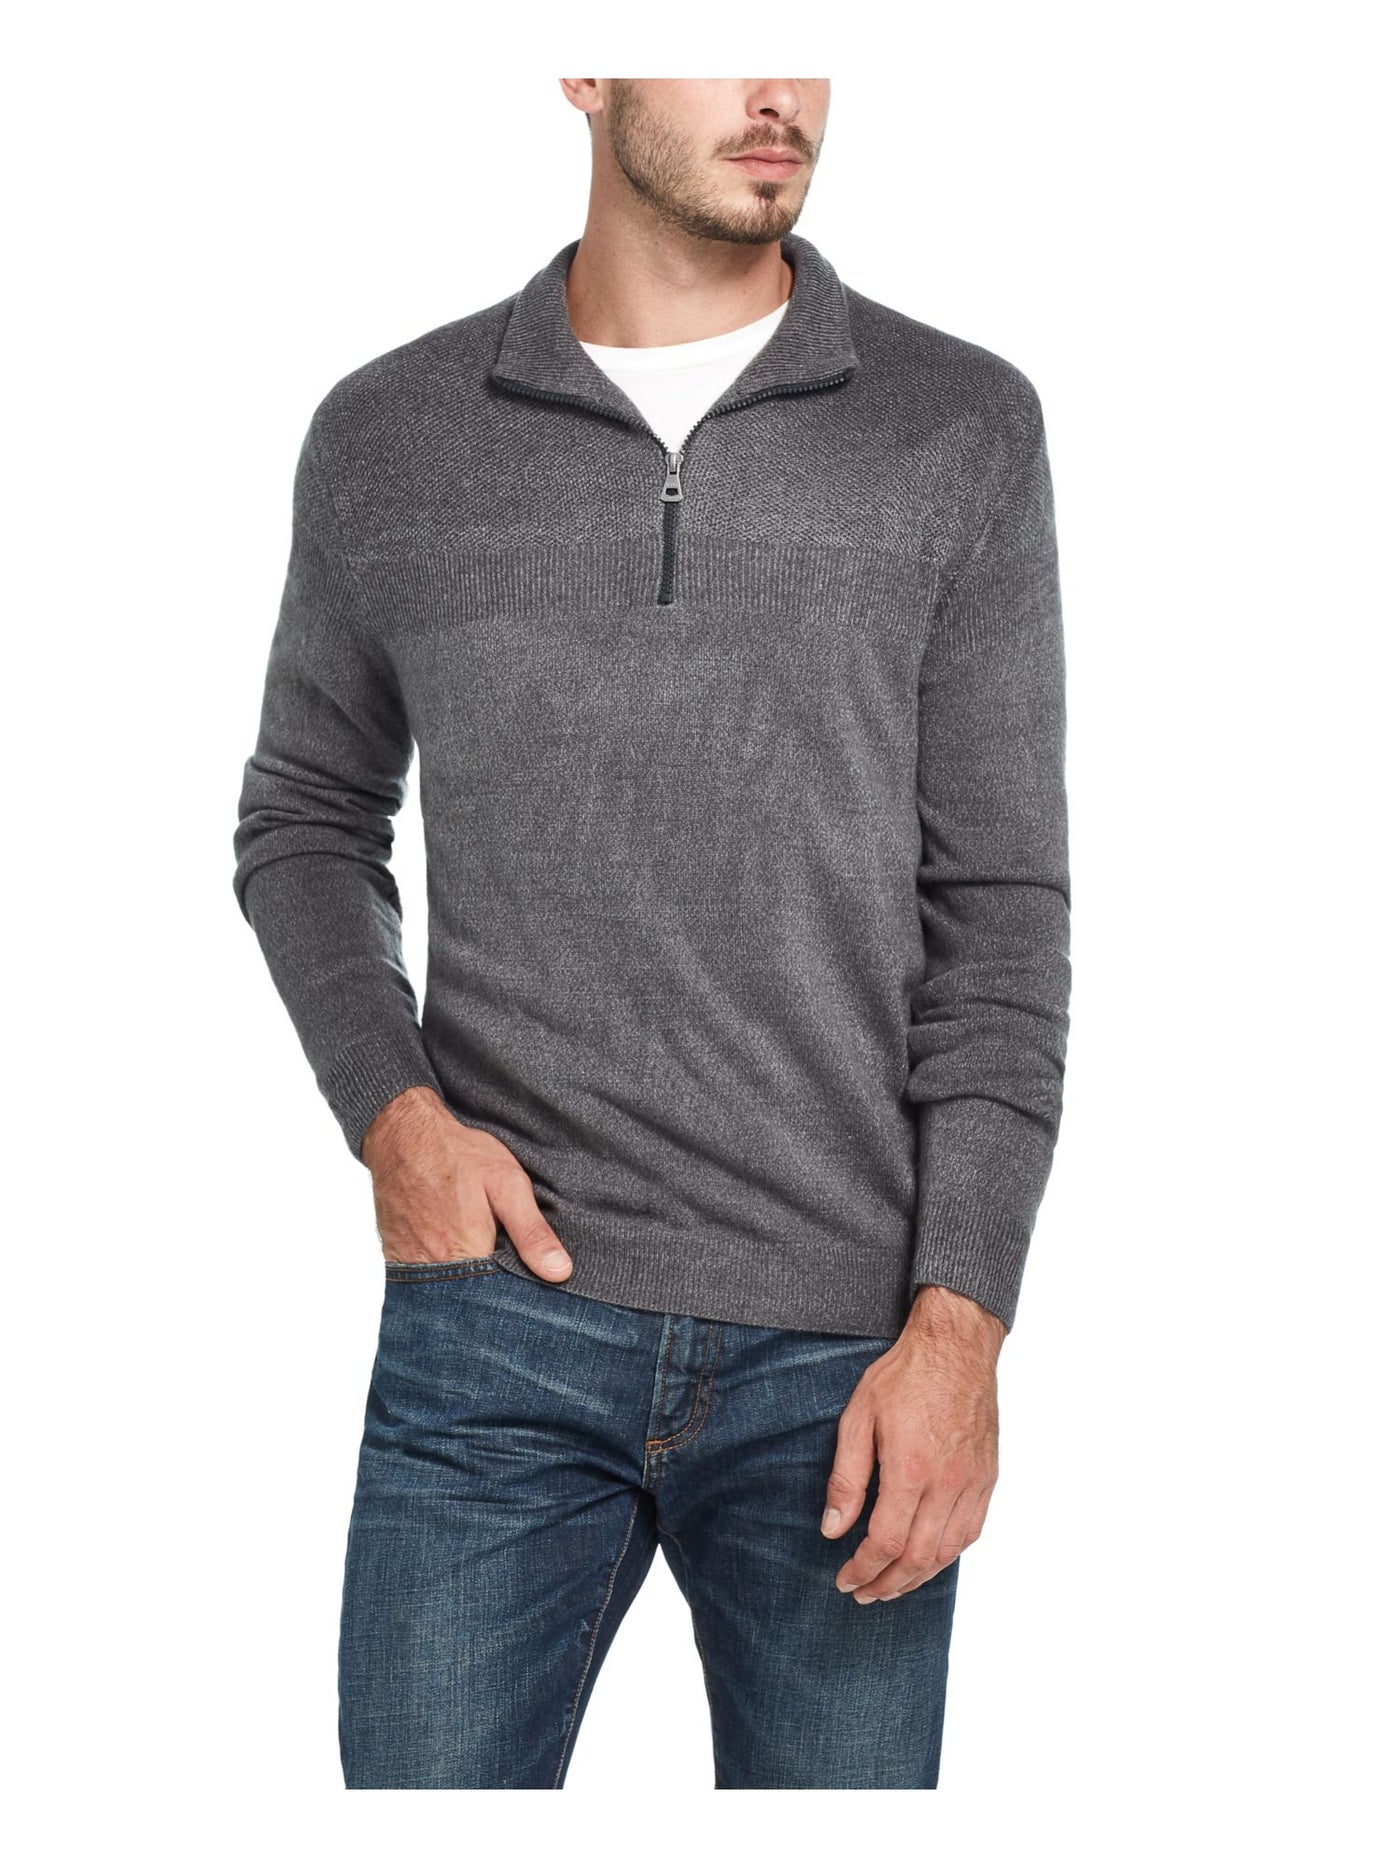 WEATHERPROOF VINTAGE Mens Gray Collared Sweater S